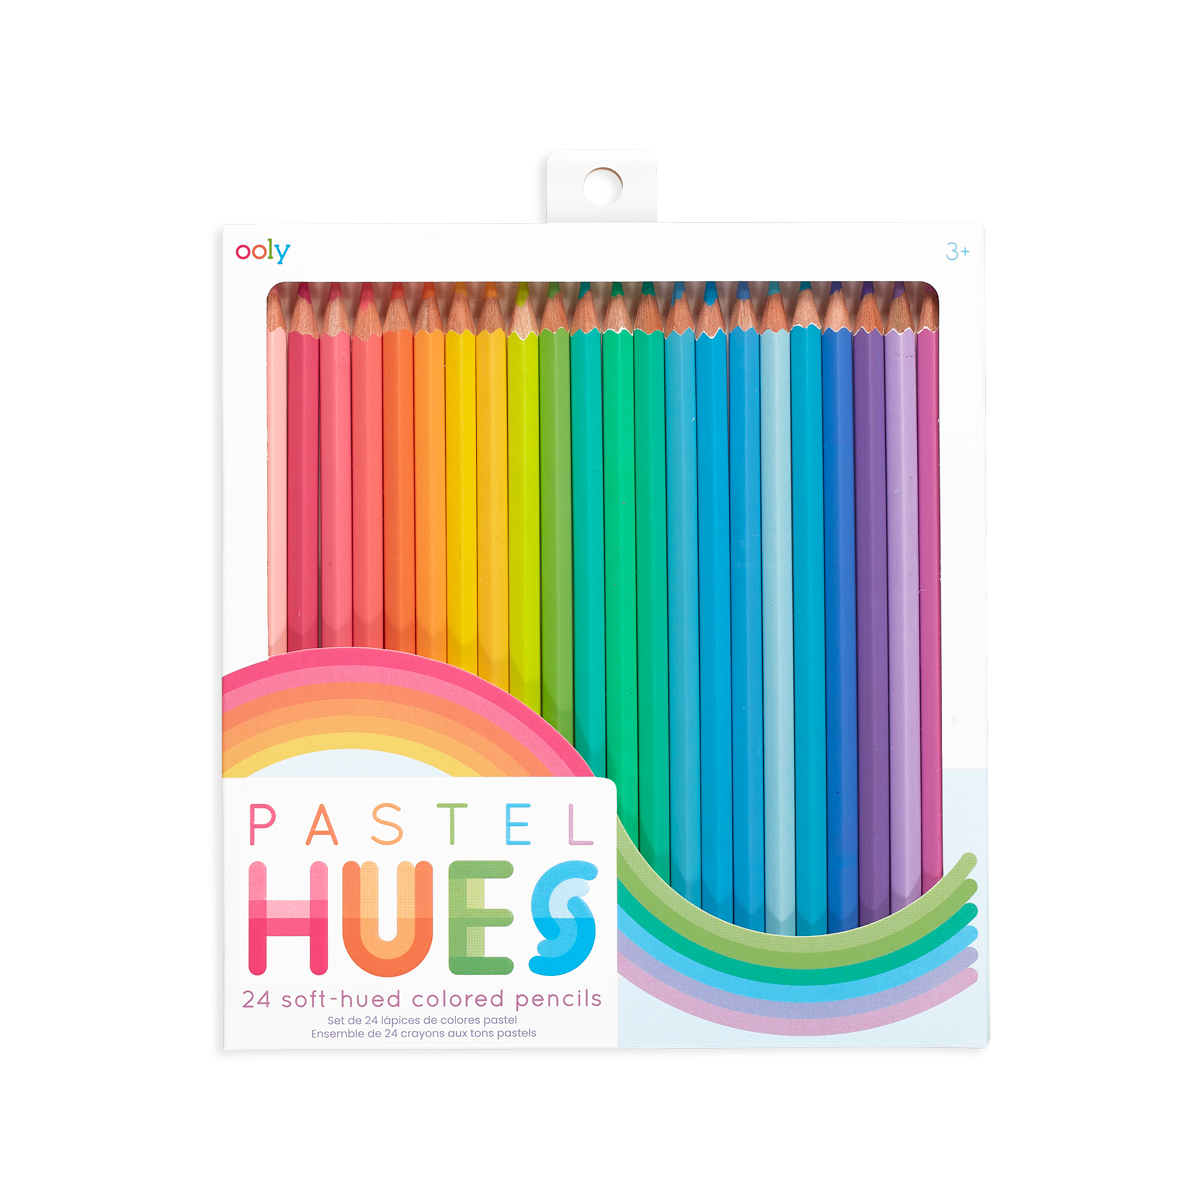 Mixed Colored Pencils, Set of 24 – Hawkins New York